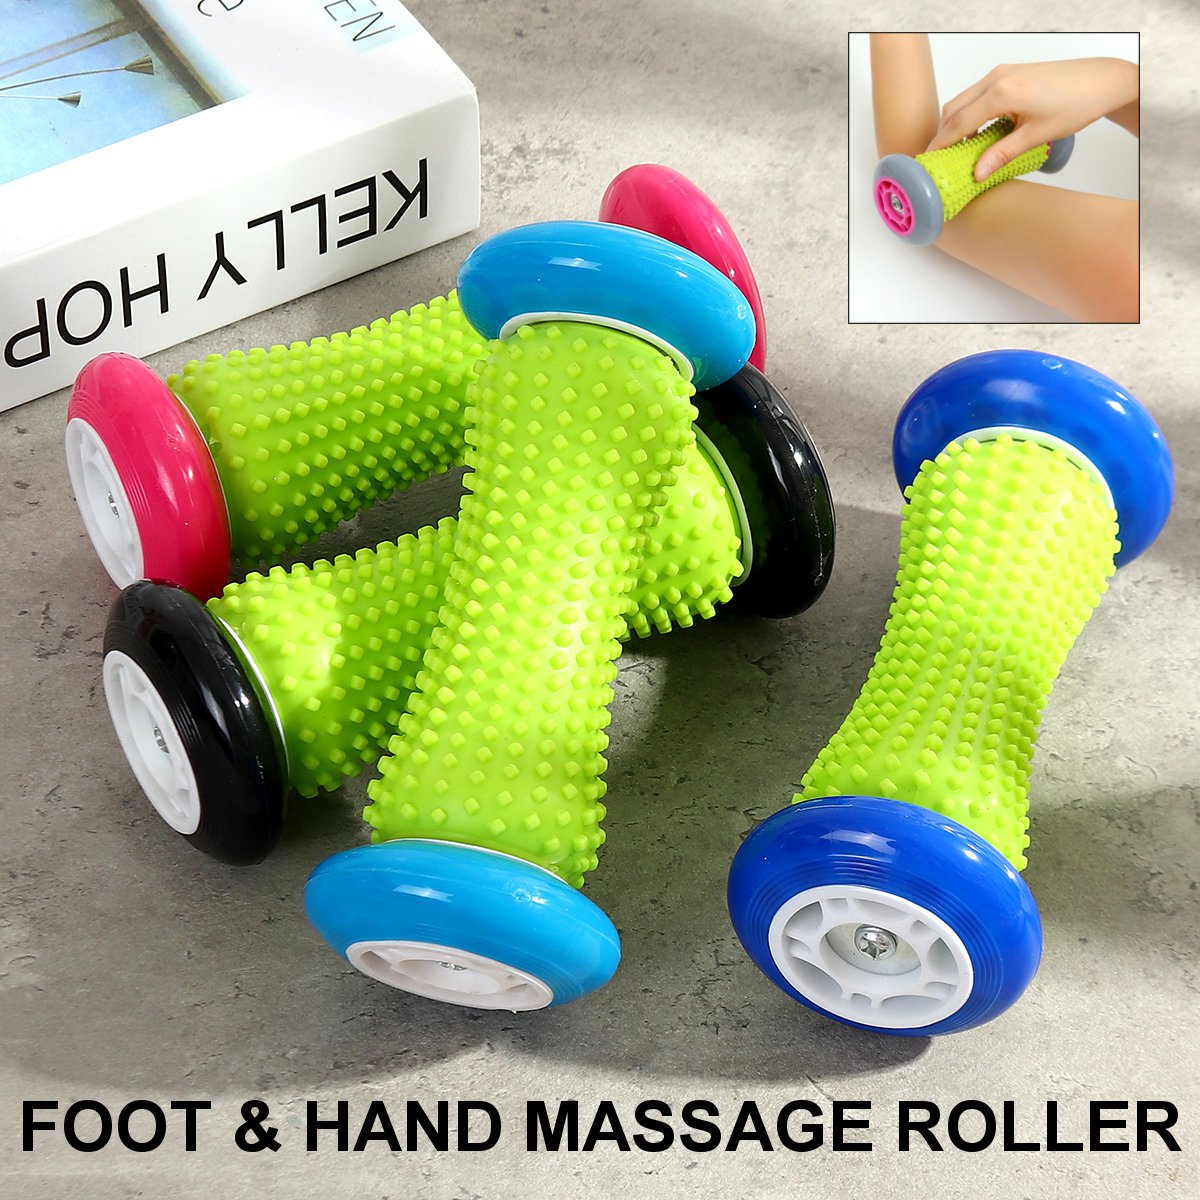 Foot-Massage-Roller-Muscle-Roller-Stick-Massager-Hand-Arms-Pain-Stress-Relief-1681418-1